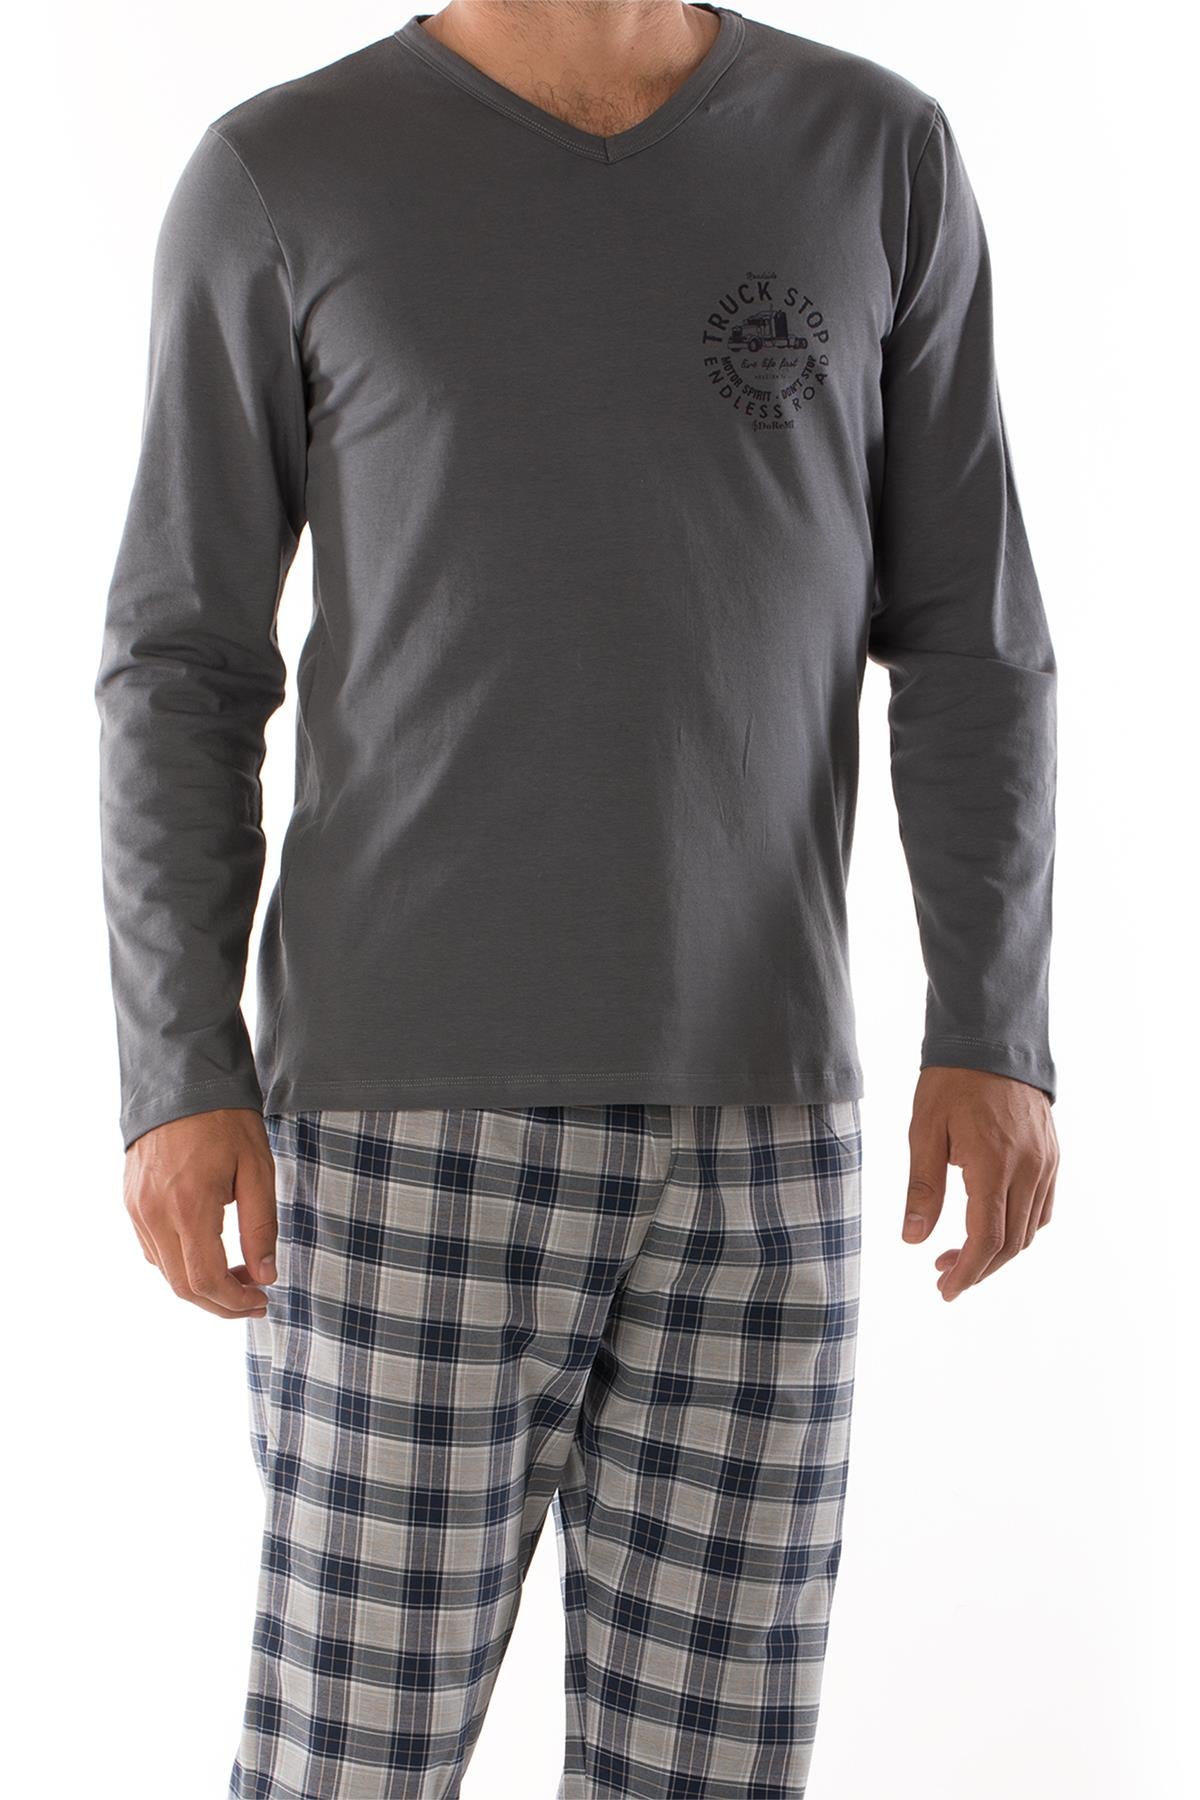 Casual Long-sleeved Men's Cotton Pajamas Suit Angelwarriorfitness.com